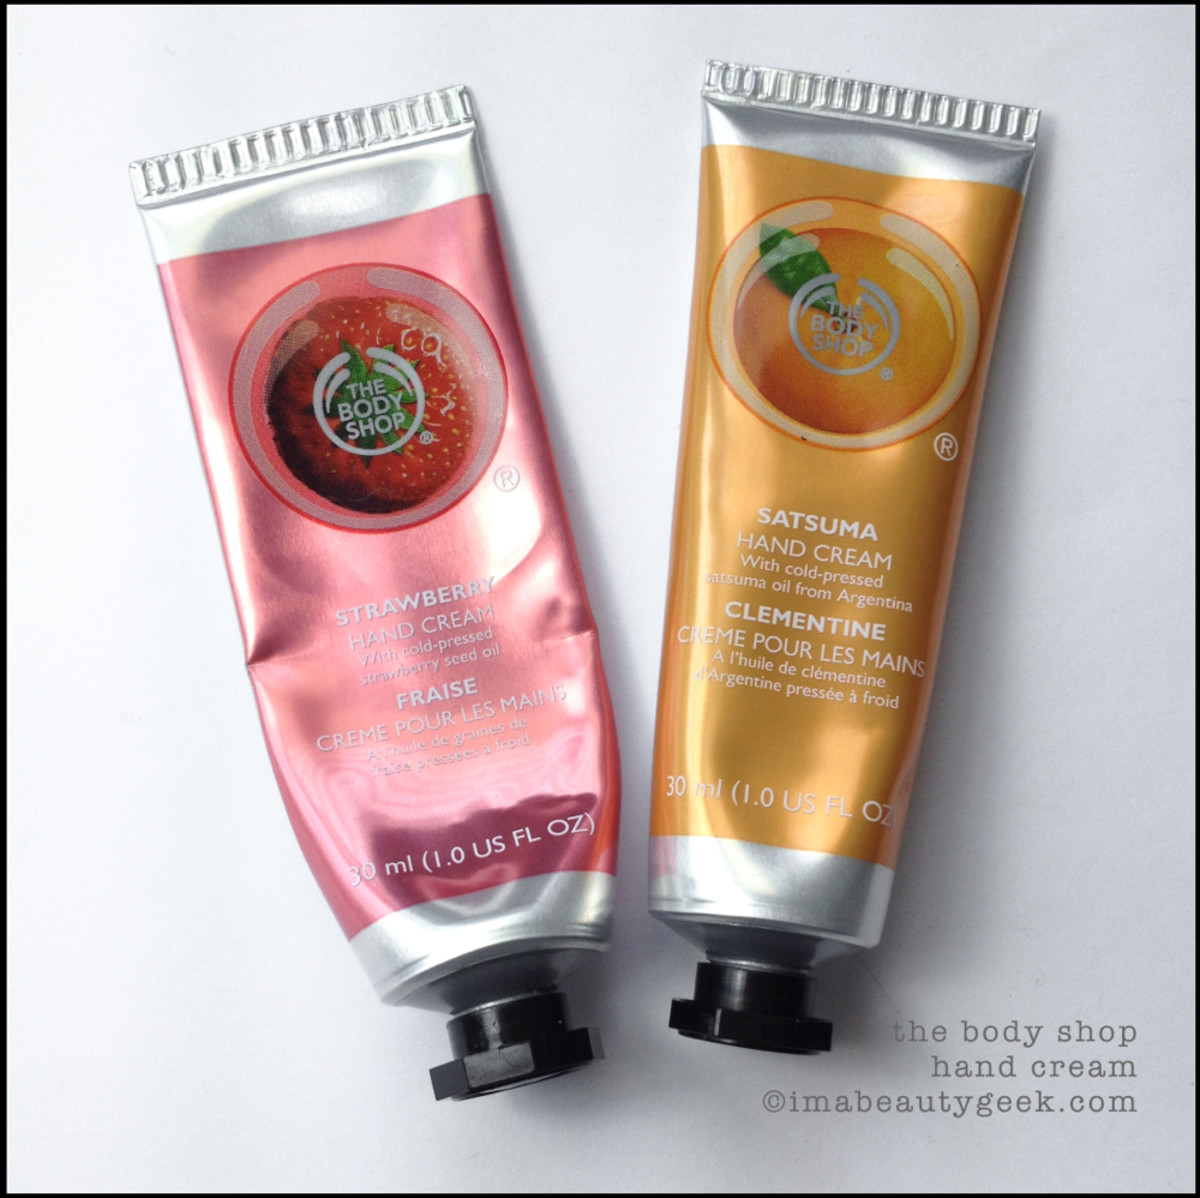 The Body Shop Strawberry Hand Cream Satsuma Hand Cream